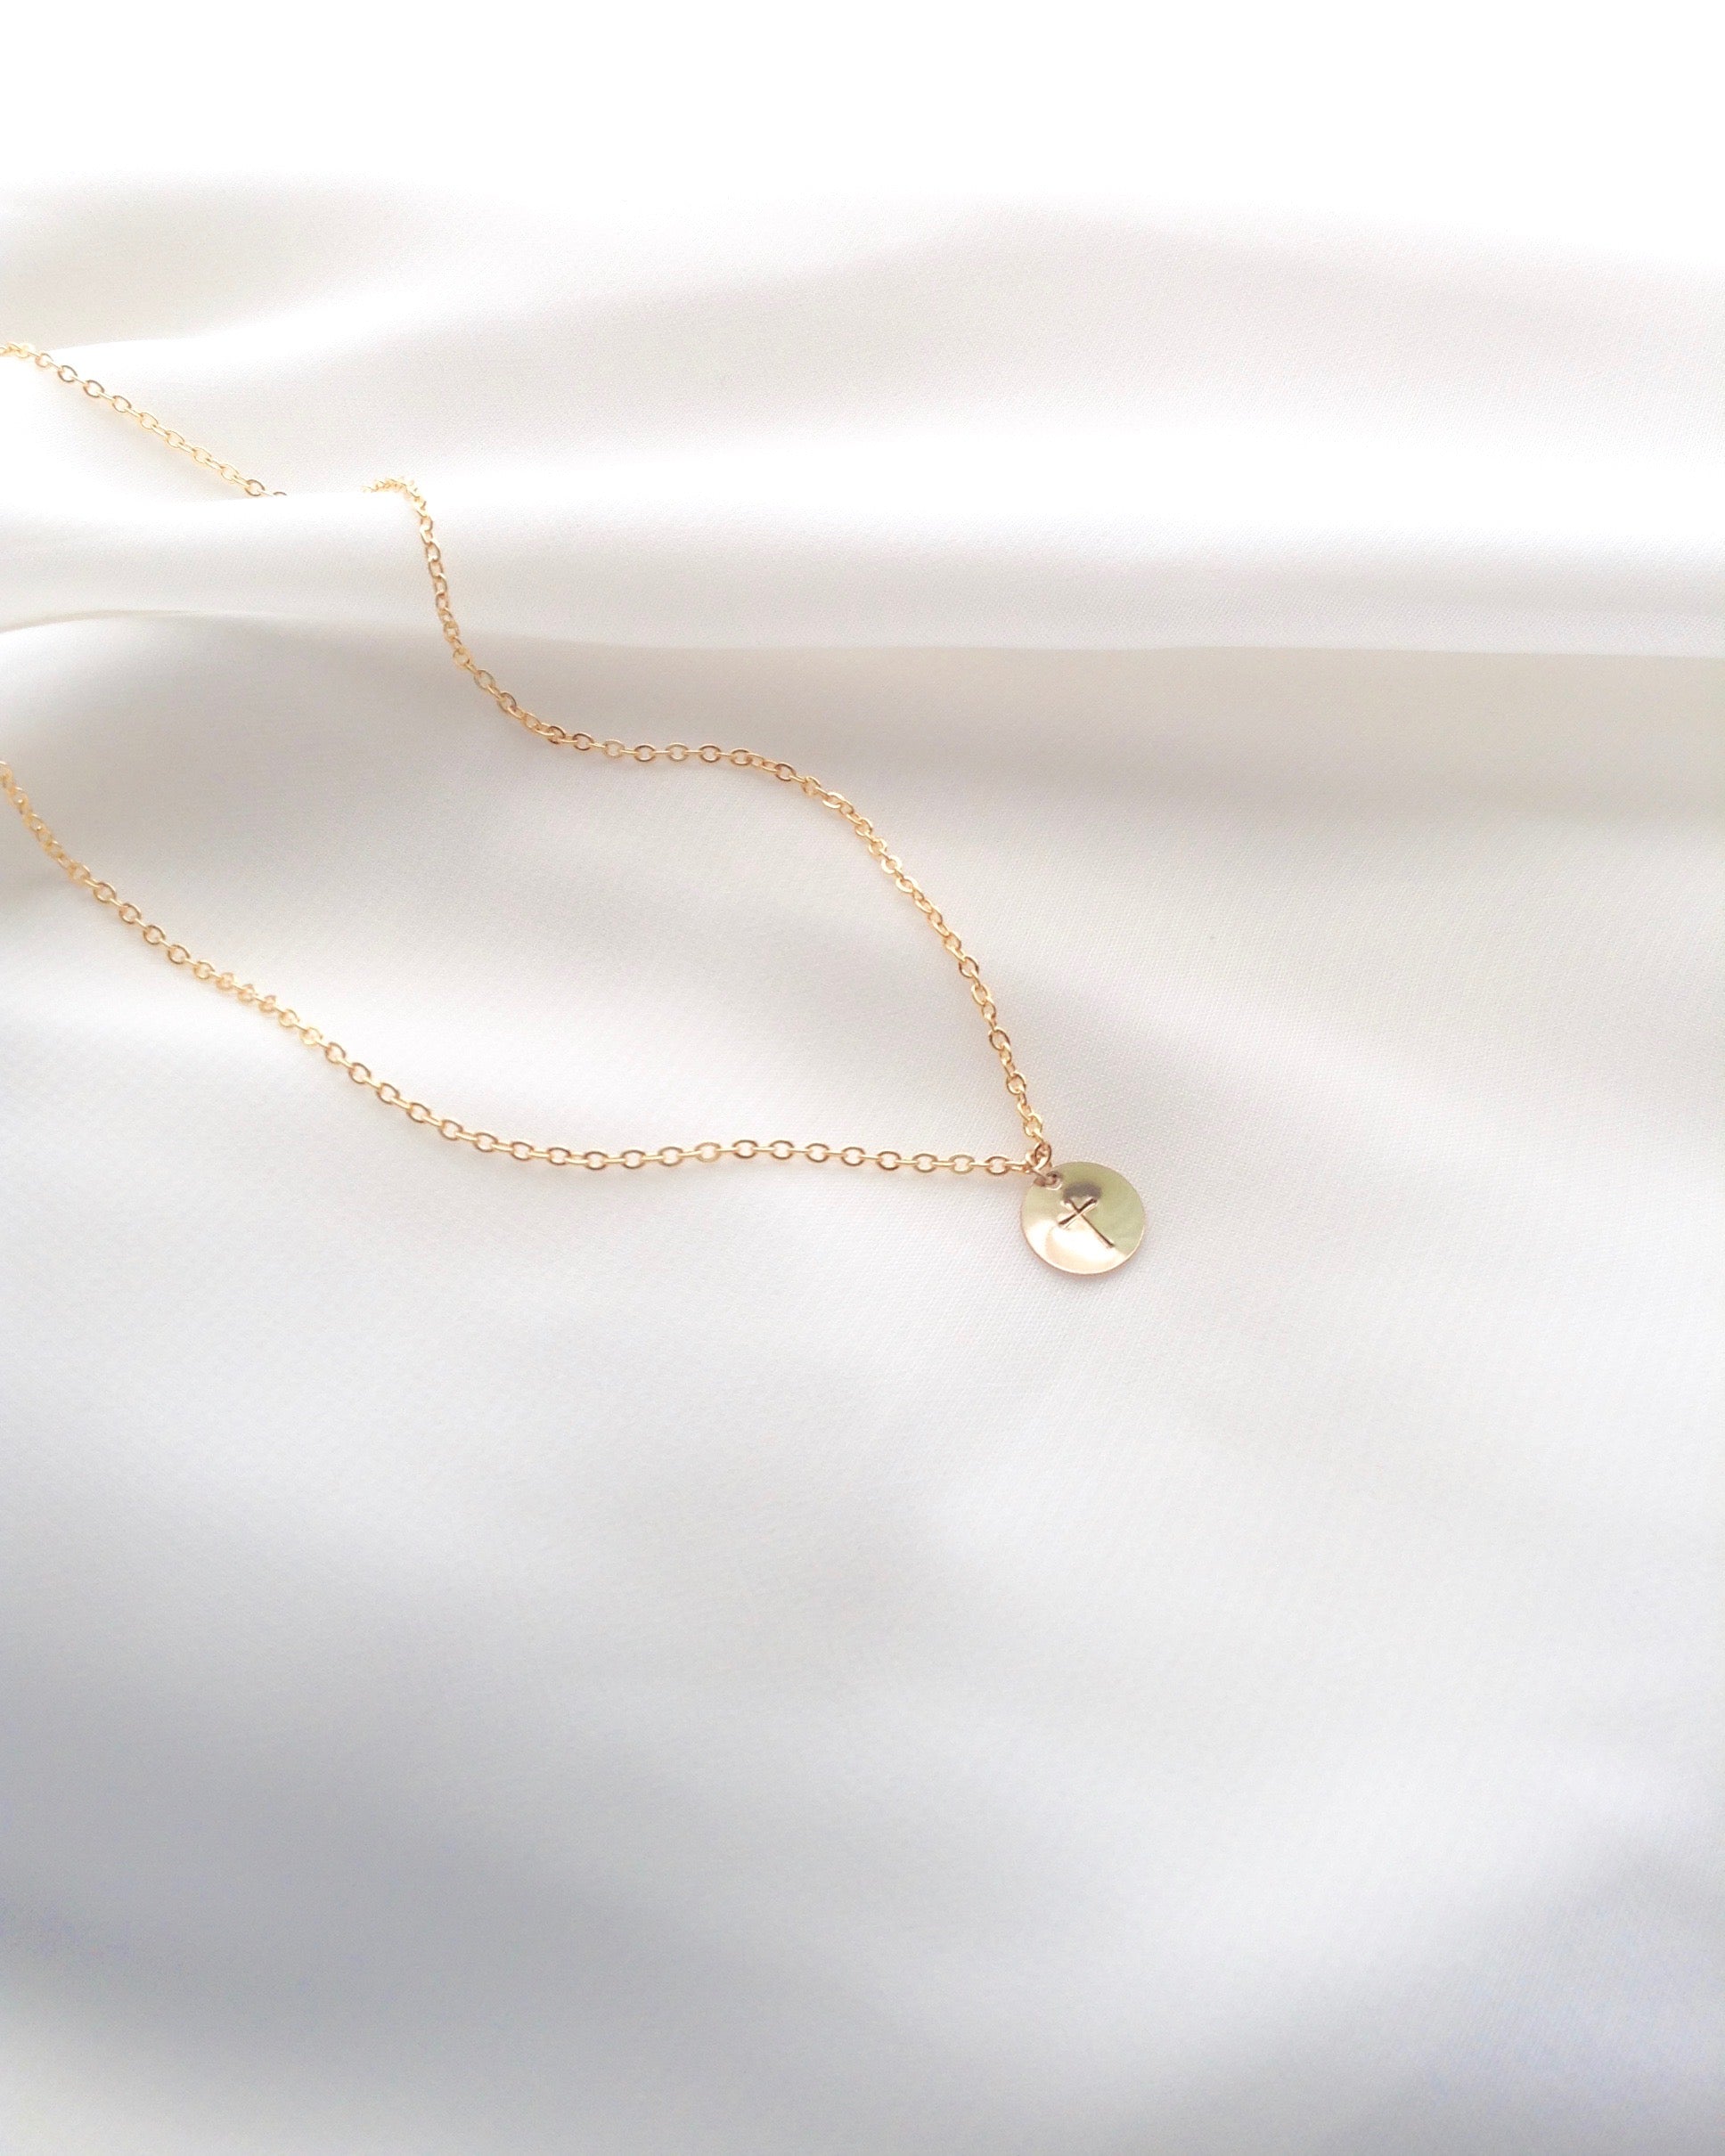 Tiny Cross Necklace | Simple Elegant Everyday Necklace | IB Jewelry